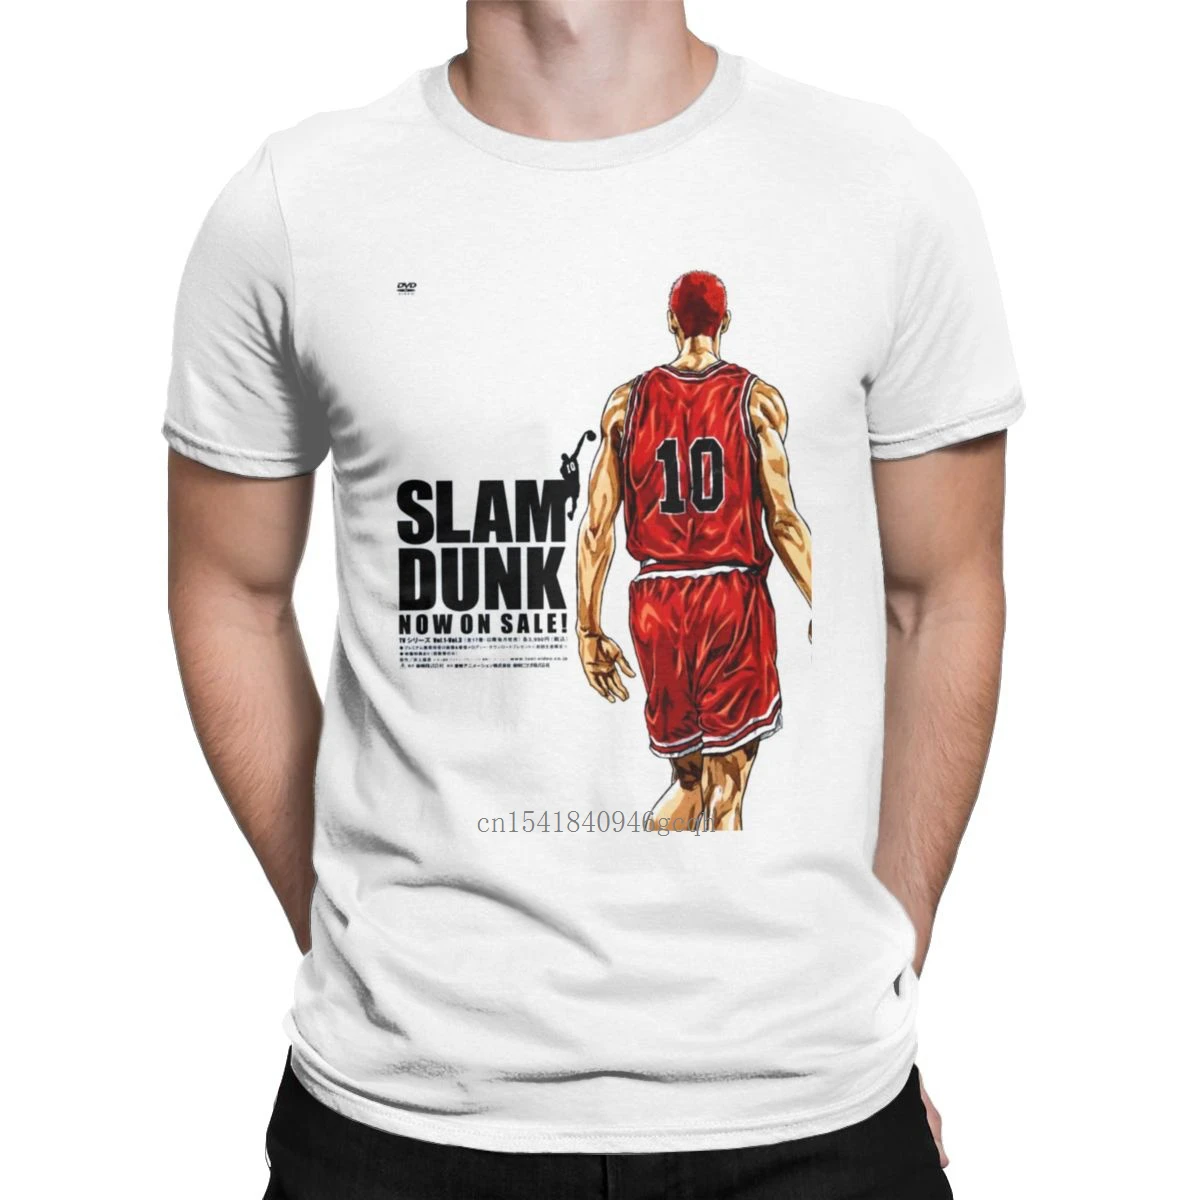 

Men's Slam Dunk Sports T Shirt 80s Japanese Anime Pure Cotton Clothing Humor Short Sleeve Crew Neck Tee Shirt Gift Idea T-Shirts